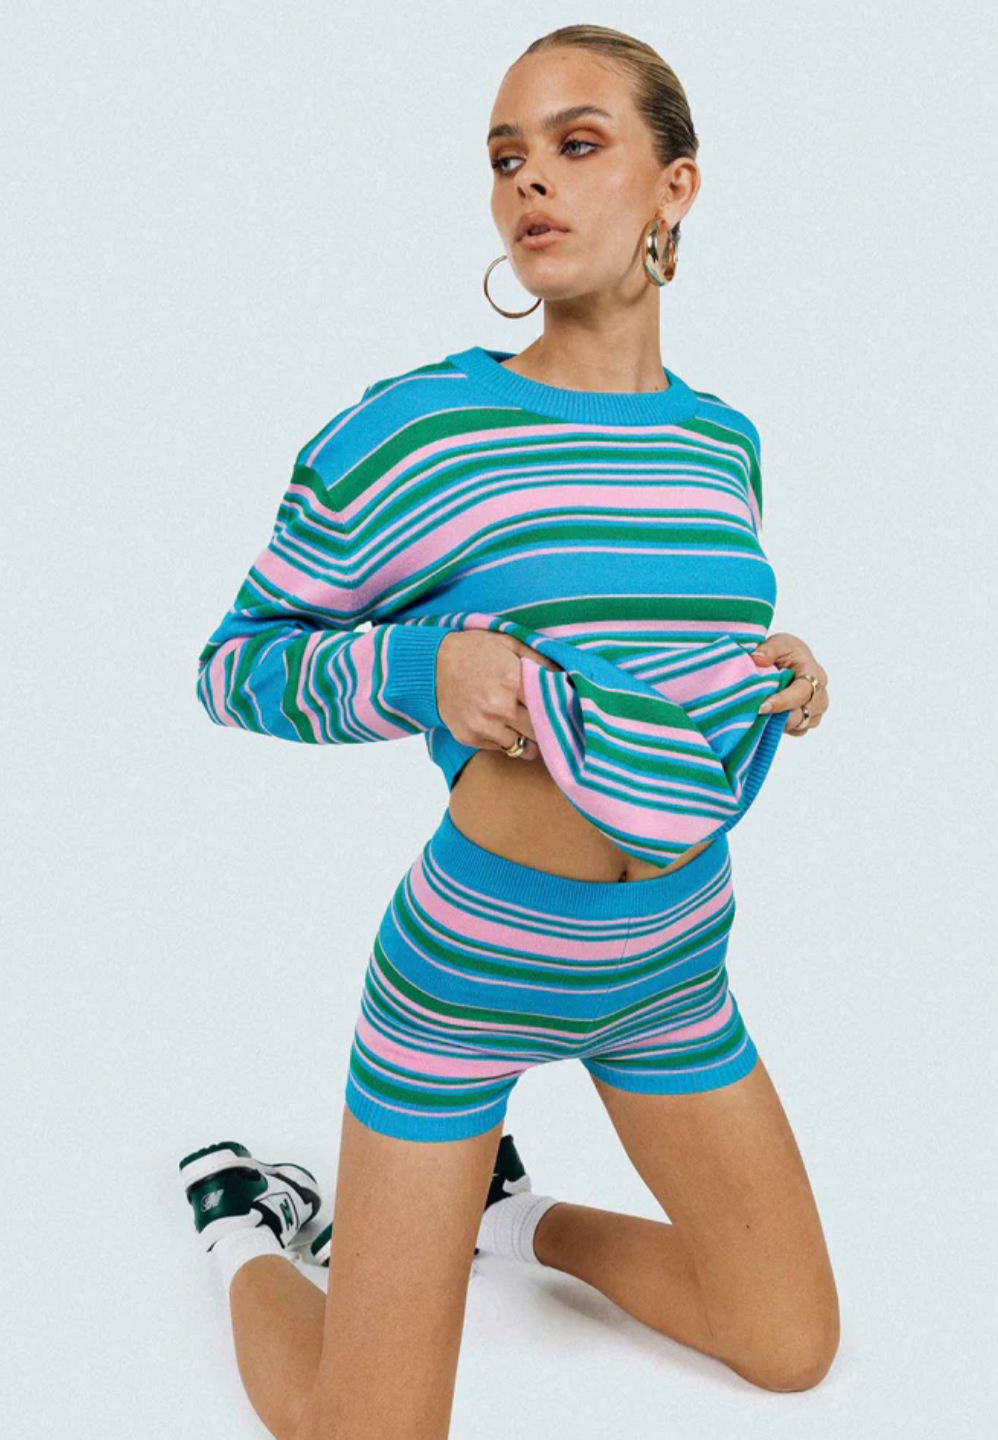 Princess Polly Knit Shorts (L/XL) New with tags!